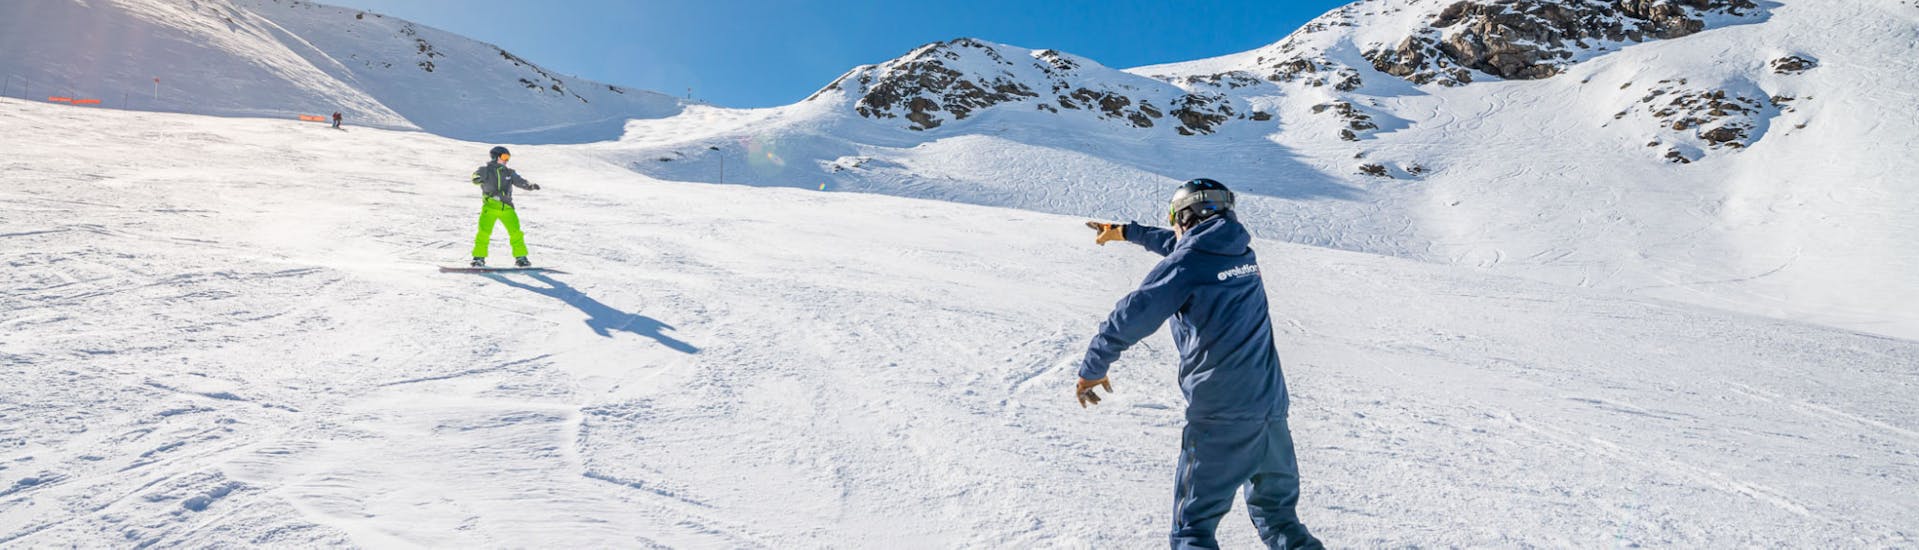 Lezioni private di Snowboard a partire da 4 anni per tutti i livelli.